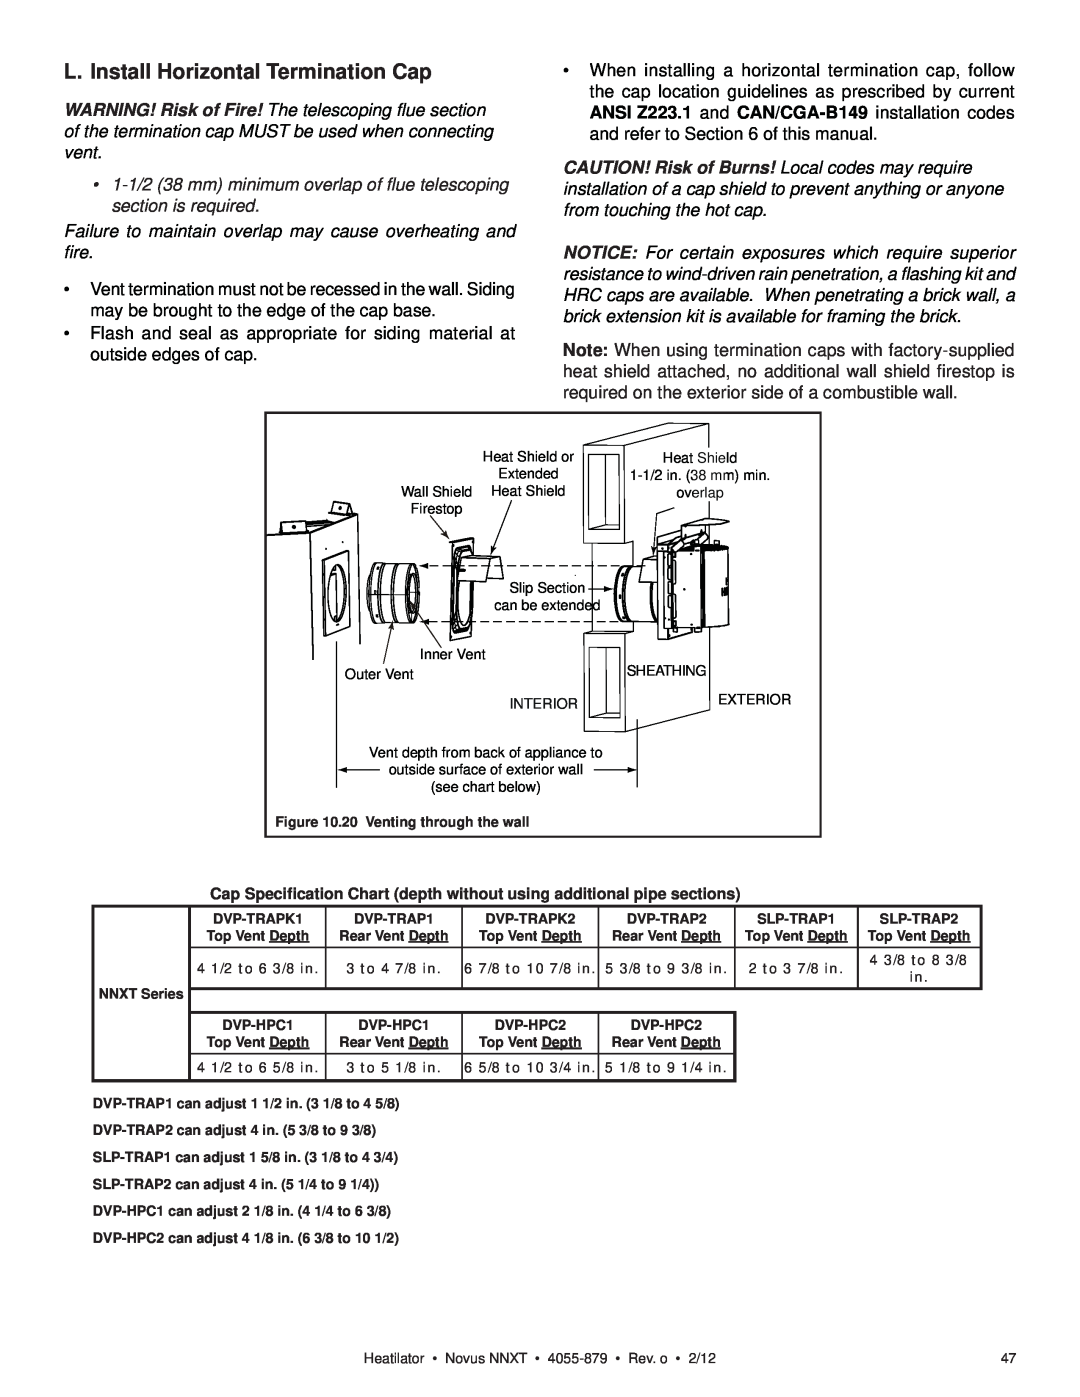 Heatiator NNXT4236I L. Install Horizontal Termination Cap, Failure to maintain overlap may cause overheating and ﬁre 